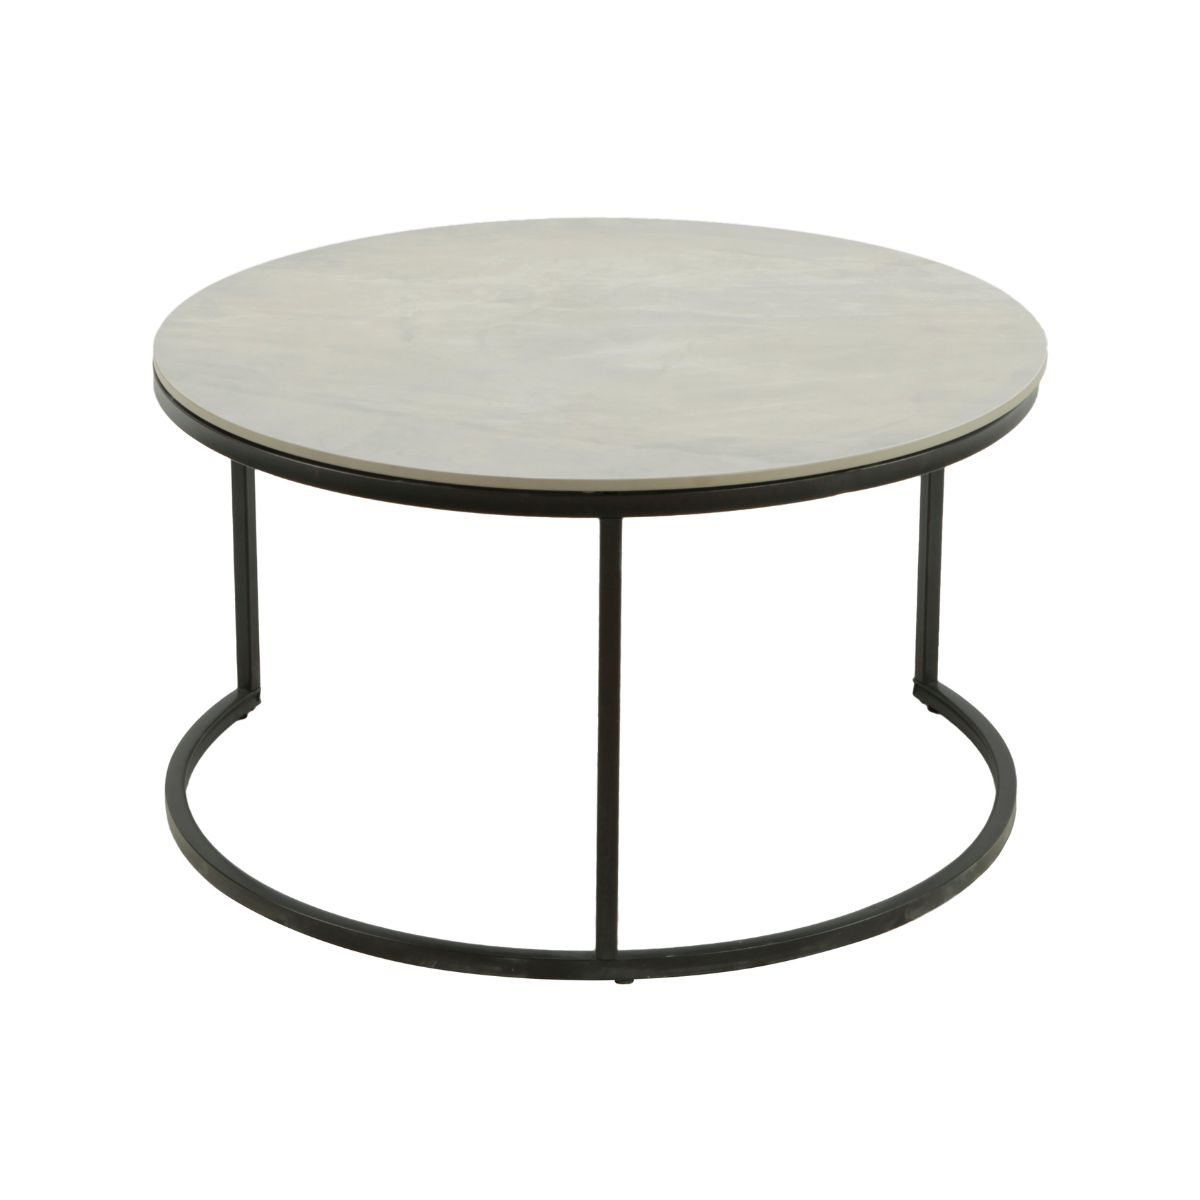 Handscross Round Coffee Table Set - 2